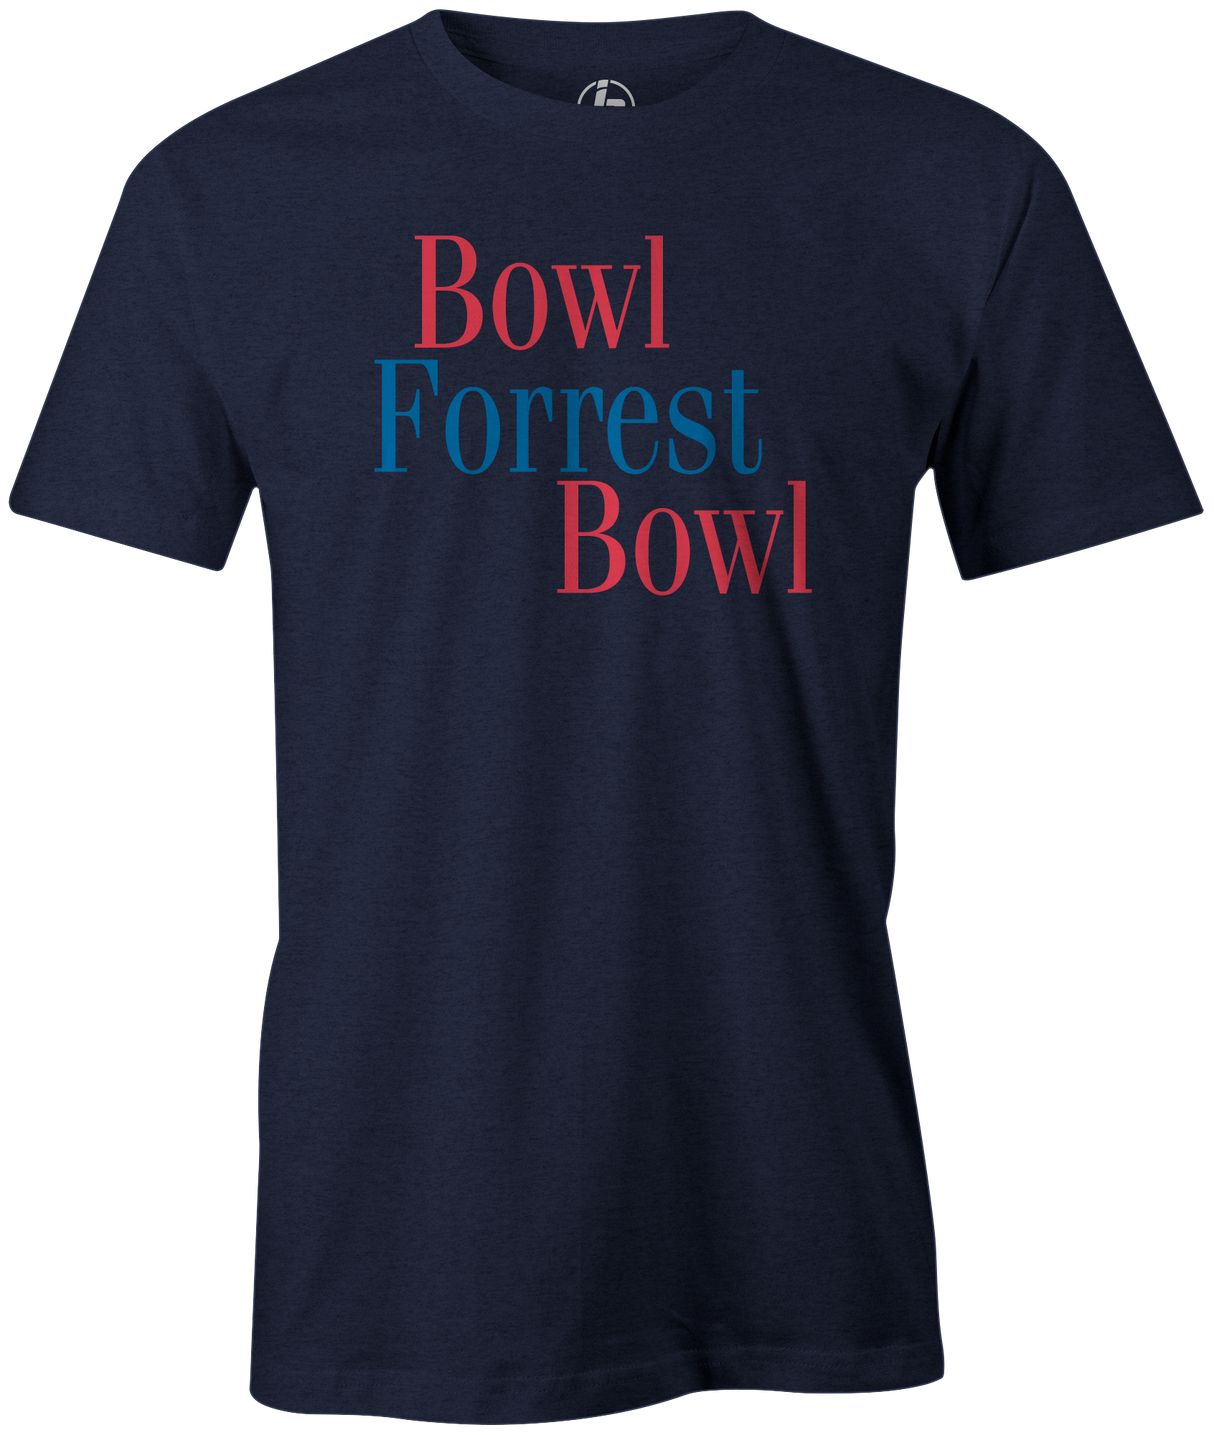 Bowl Forrest Bowl Men's t-shirt, Navy, bowling, movie, tom hanks, forreest gump, league bowling team shirt, tournament shirt, funny, cool, novelty, vintage, classic. tee, t-shirt, tee shirt, tee-shirt, tees, apparel, merch.